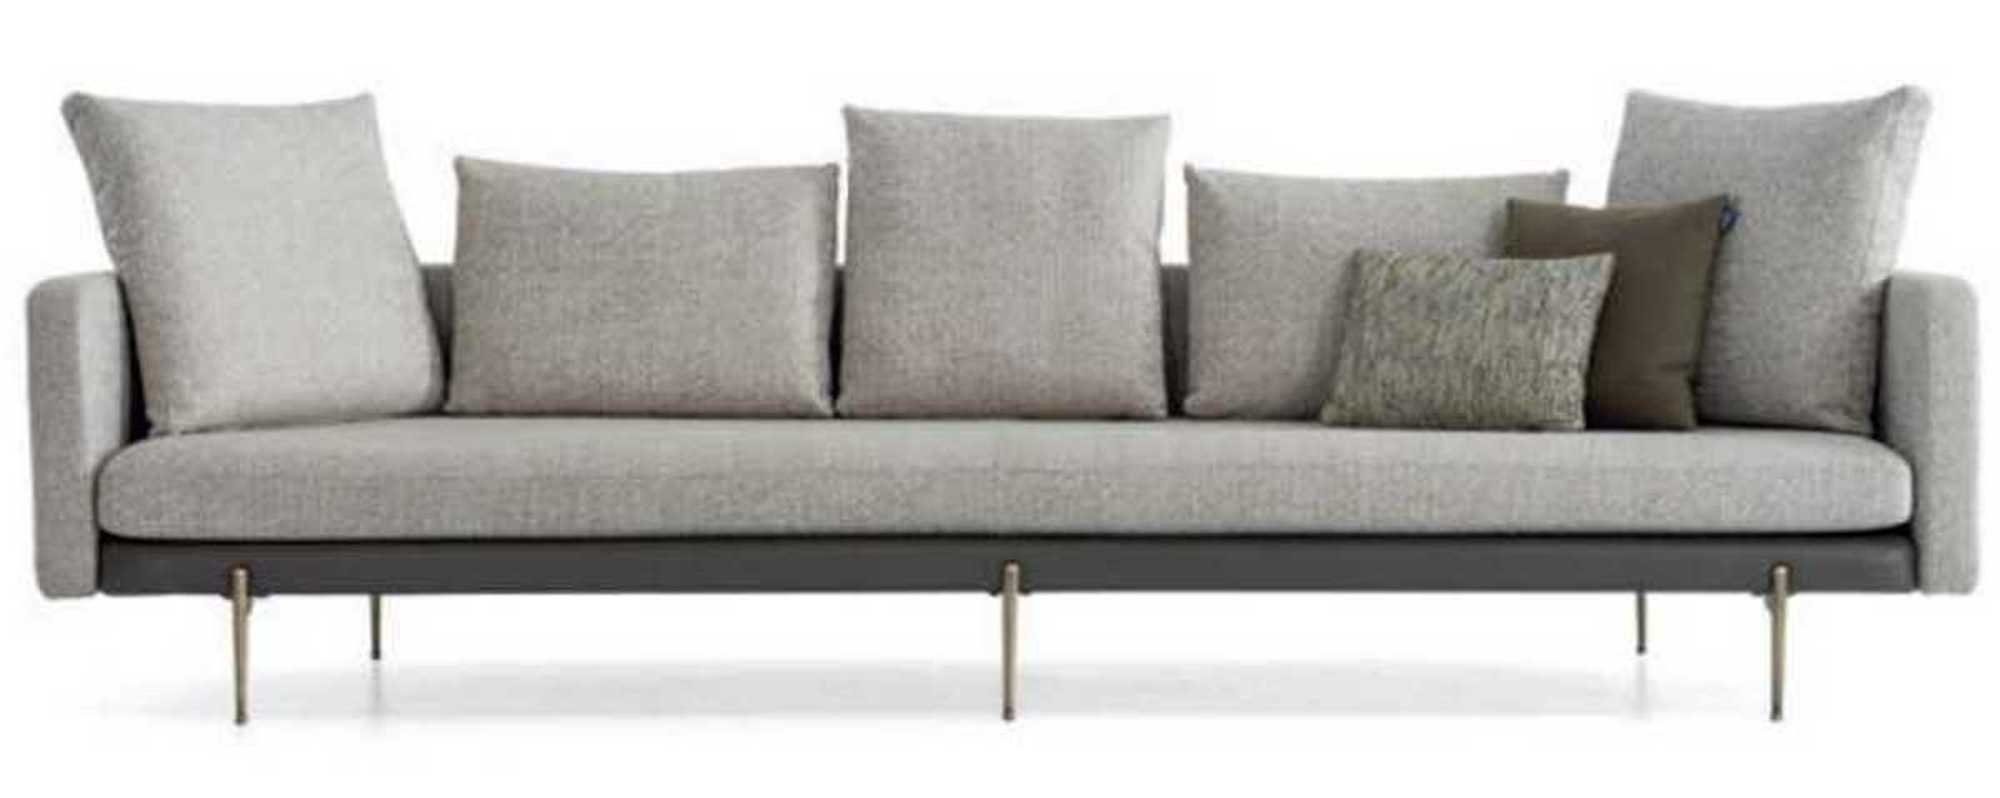 JVmoebel Sofa Made Europa Teile, sitzer, Grau Polster Wohnzimmer 1 Sofa 5 Farbe Textil in Luxus